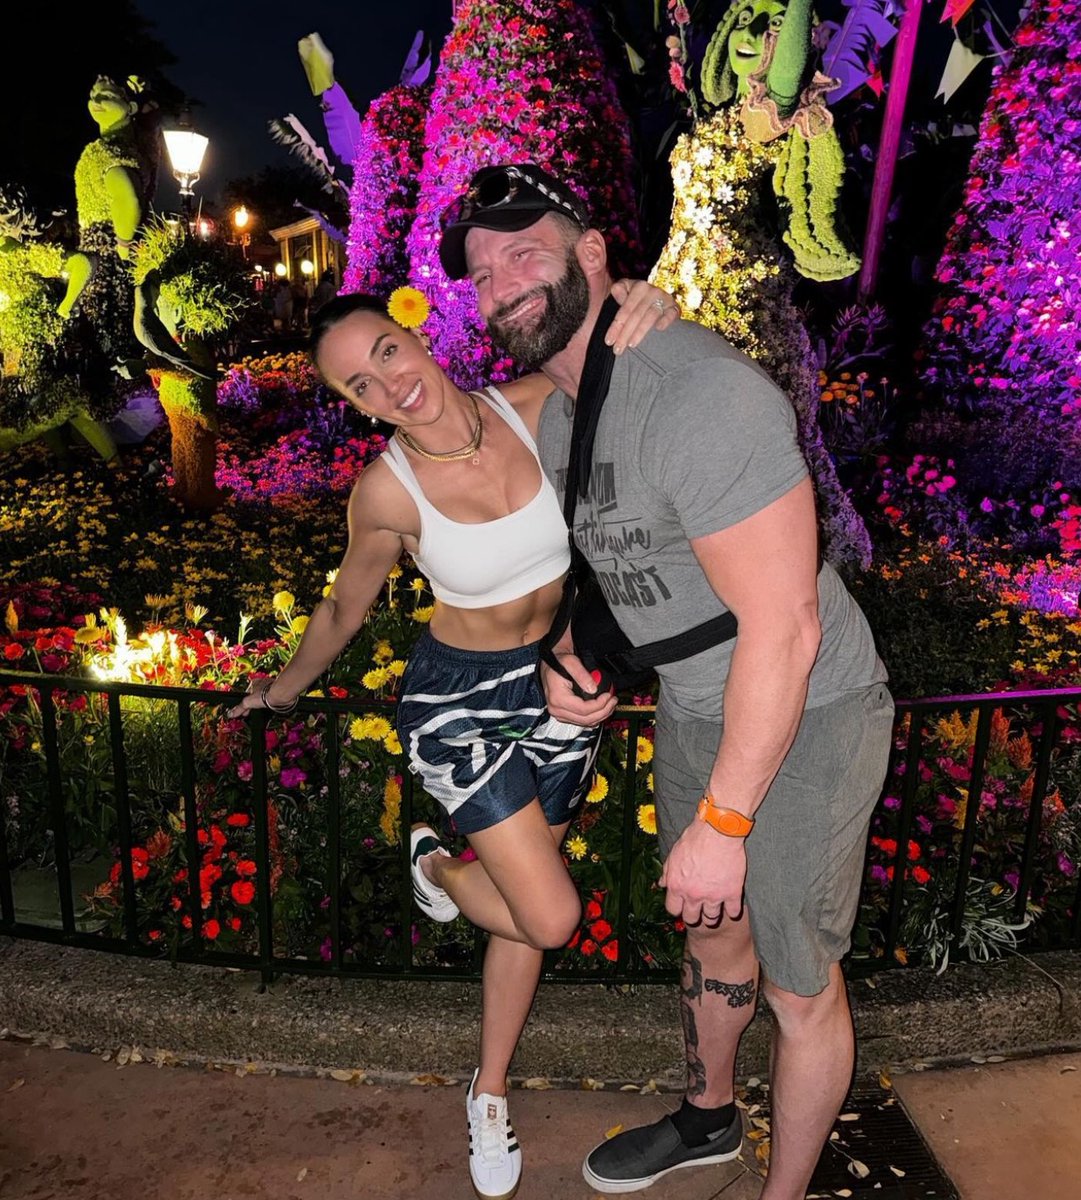 Chelsea Green and Matt Cardona at Disney World’s Epcot